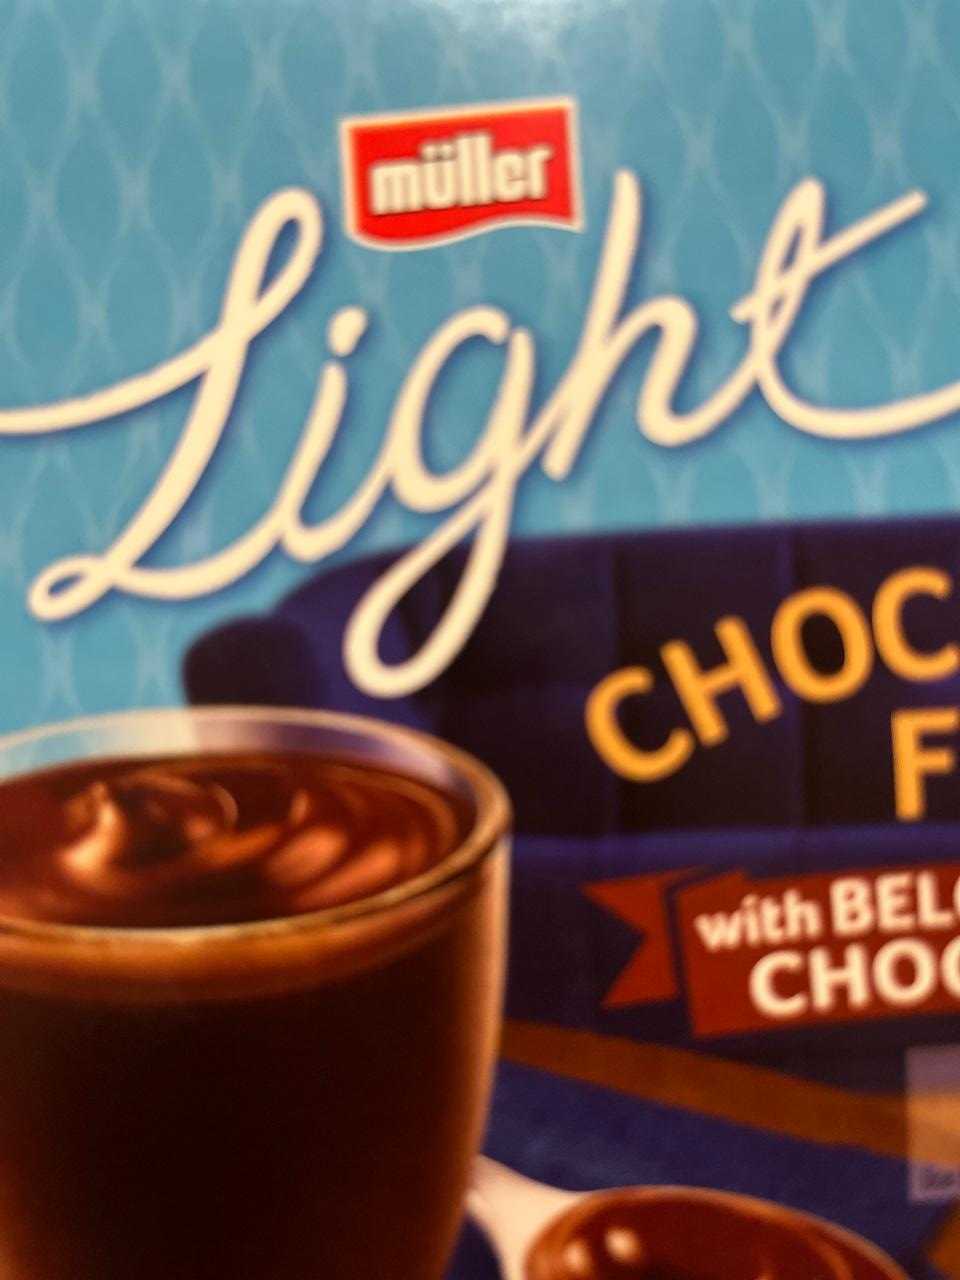 Fotografie - Muller Light Chocolate fix with belgian milk chocolate